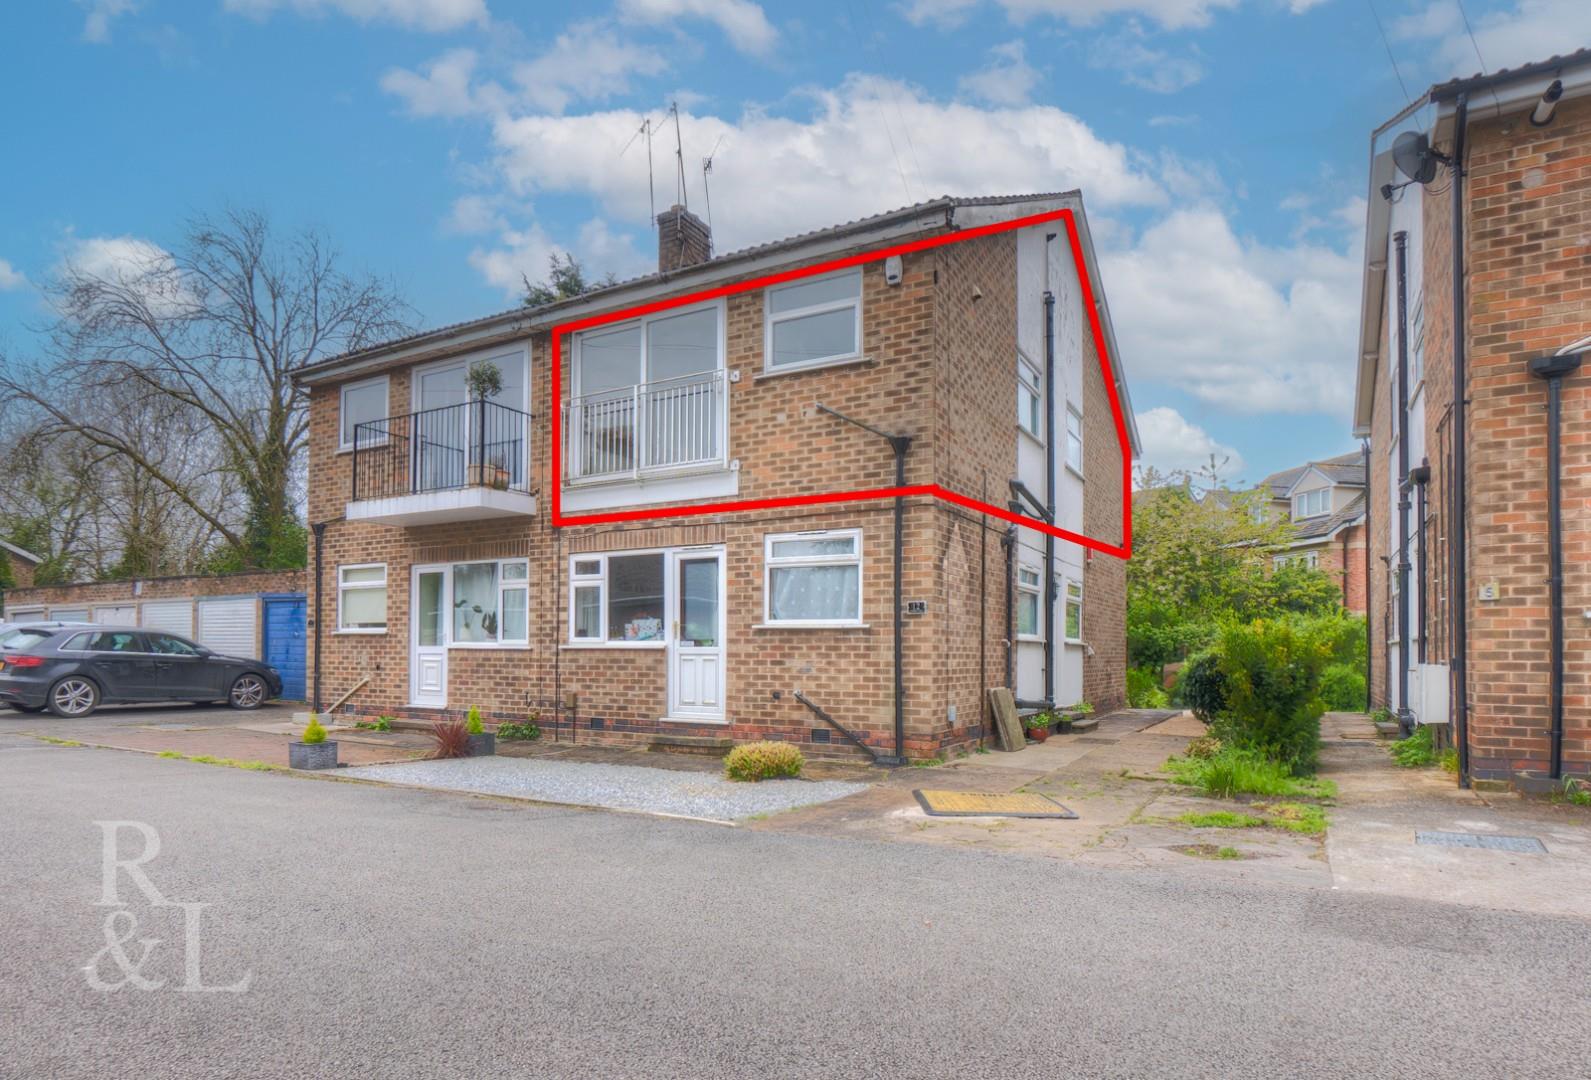 Property image for Radcliffe Road, West Bridgford, Nottingham